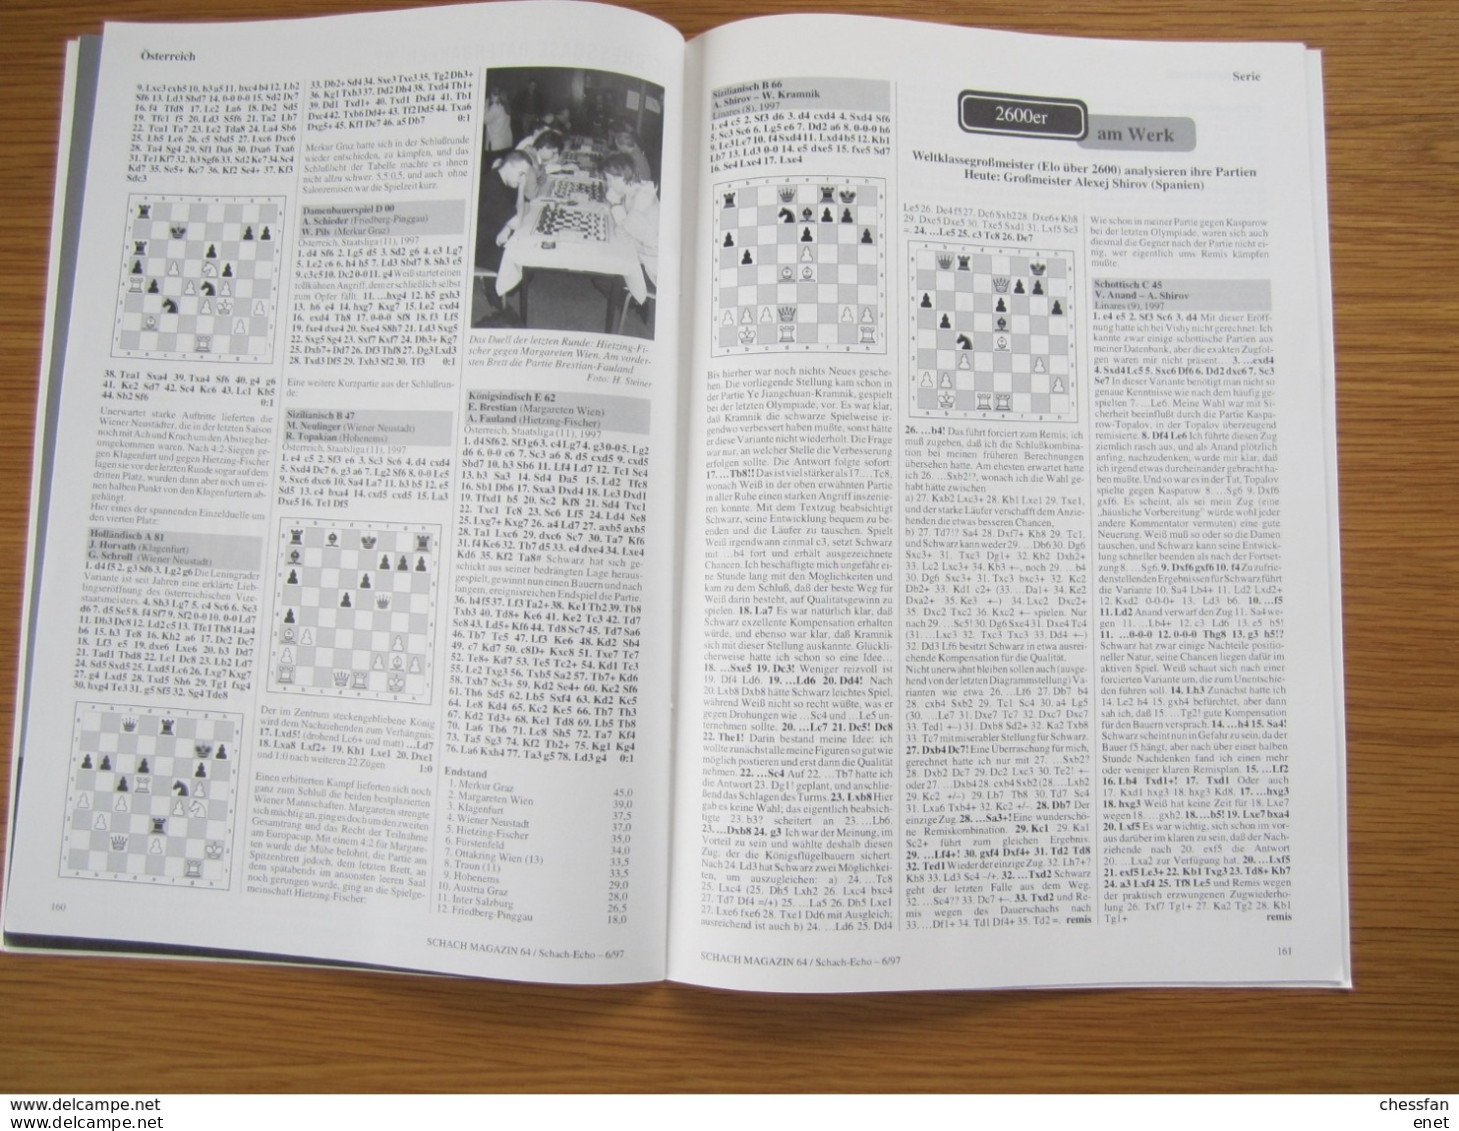 Schach Chess Ajedrez échecs - Schach Magazine - Nr 6 / 1997 - Sports